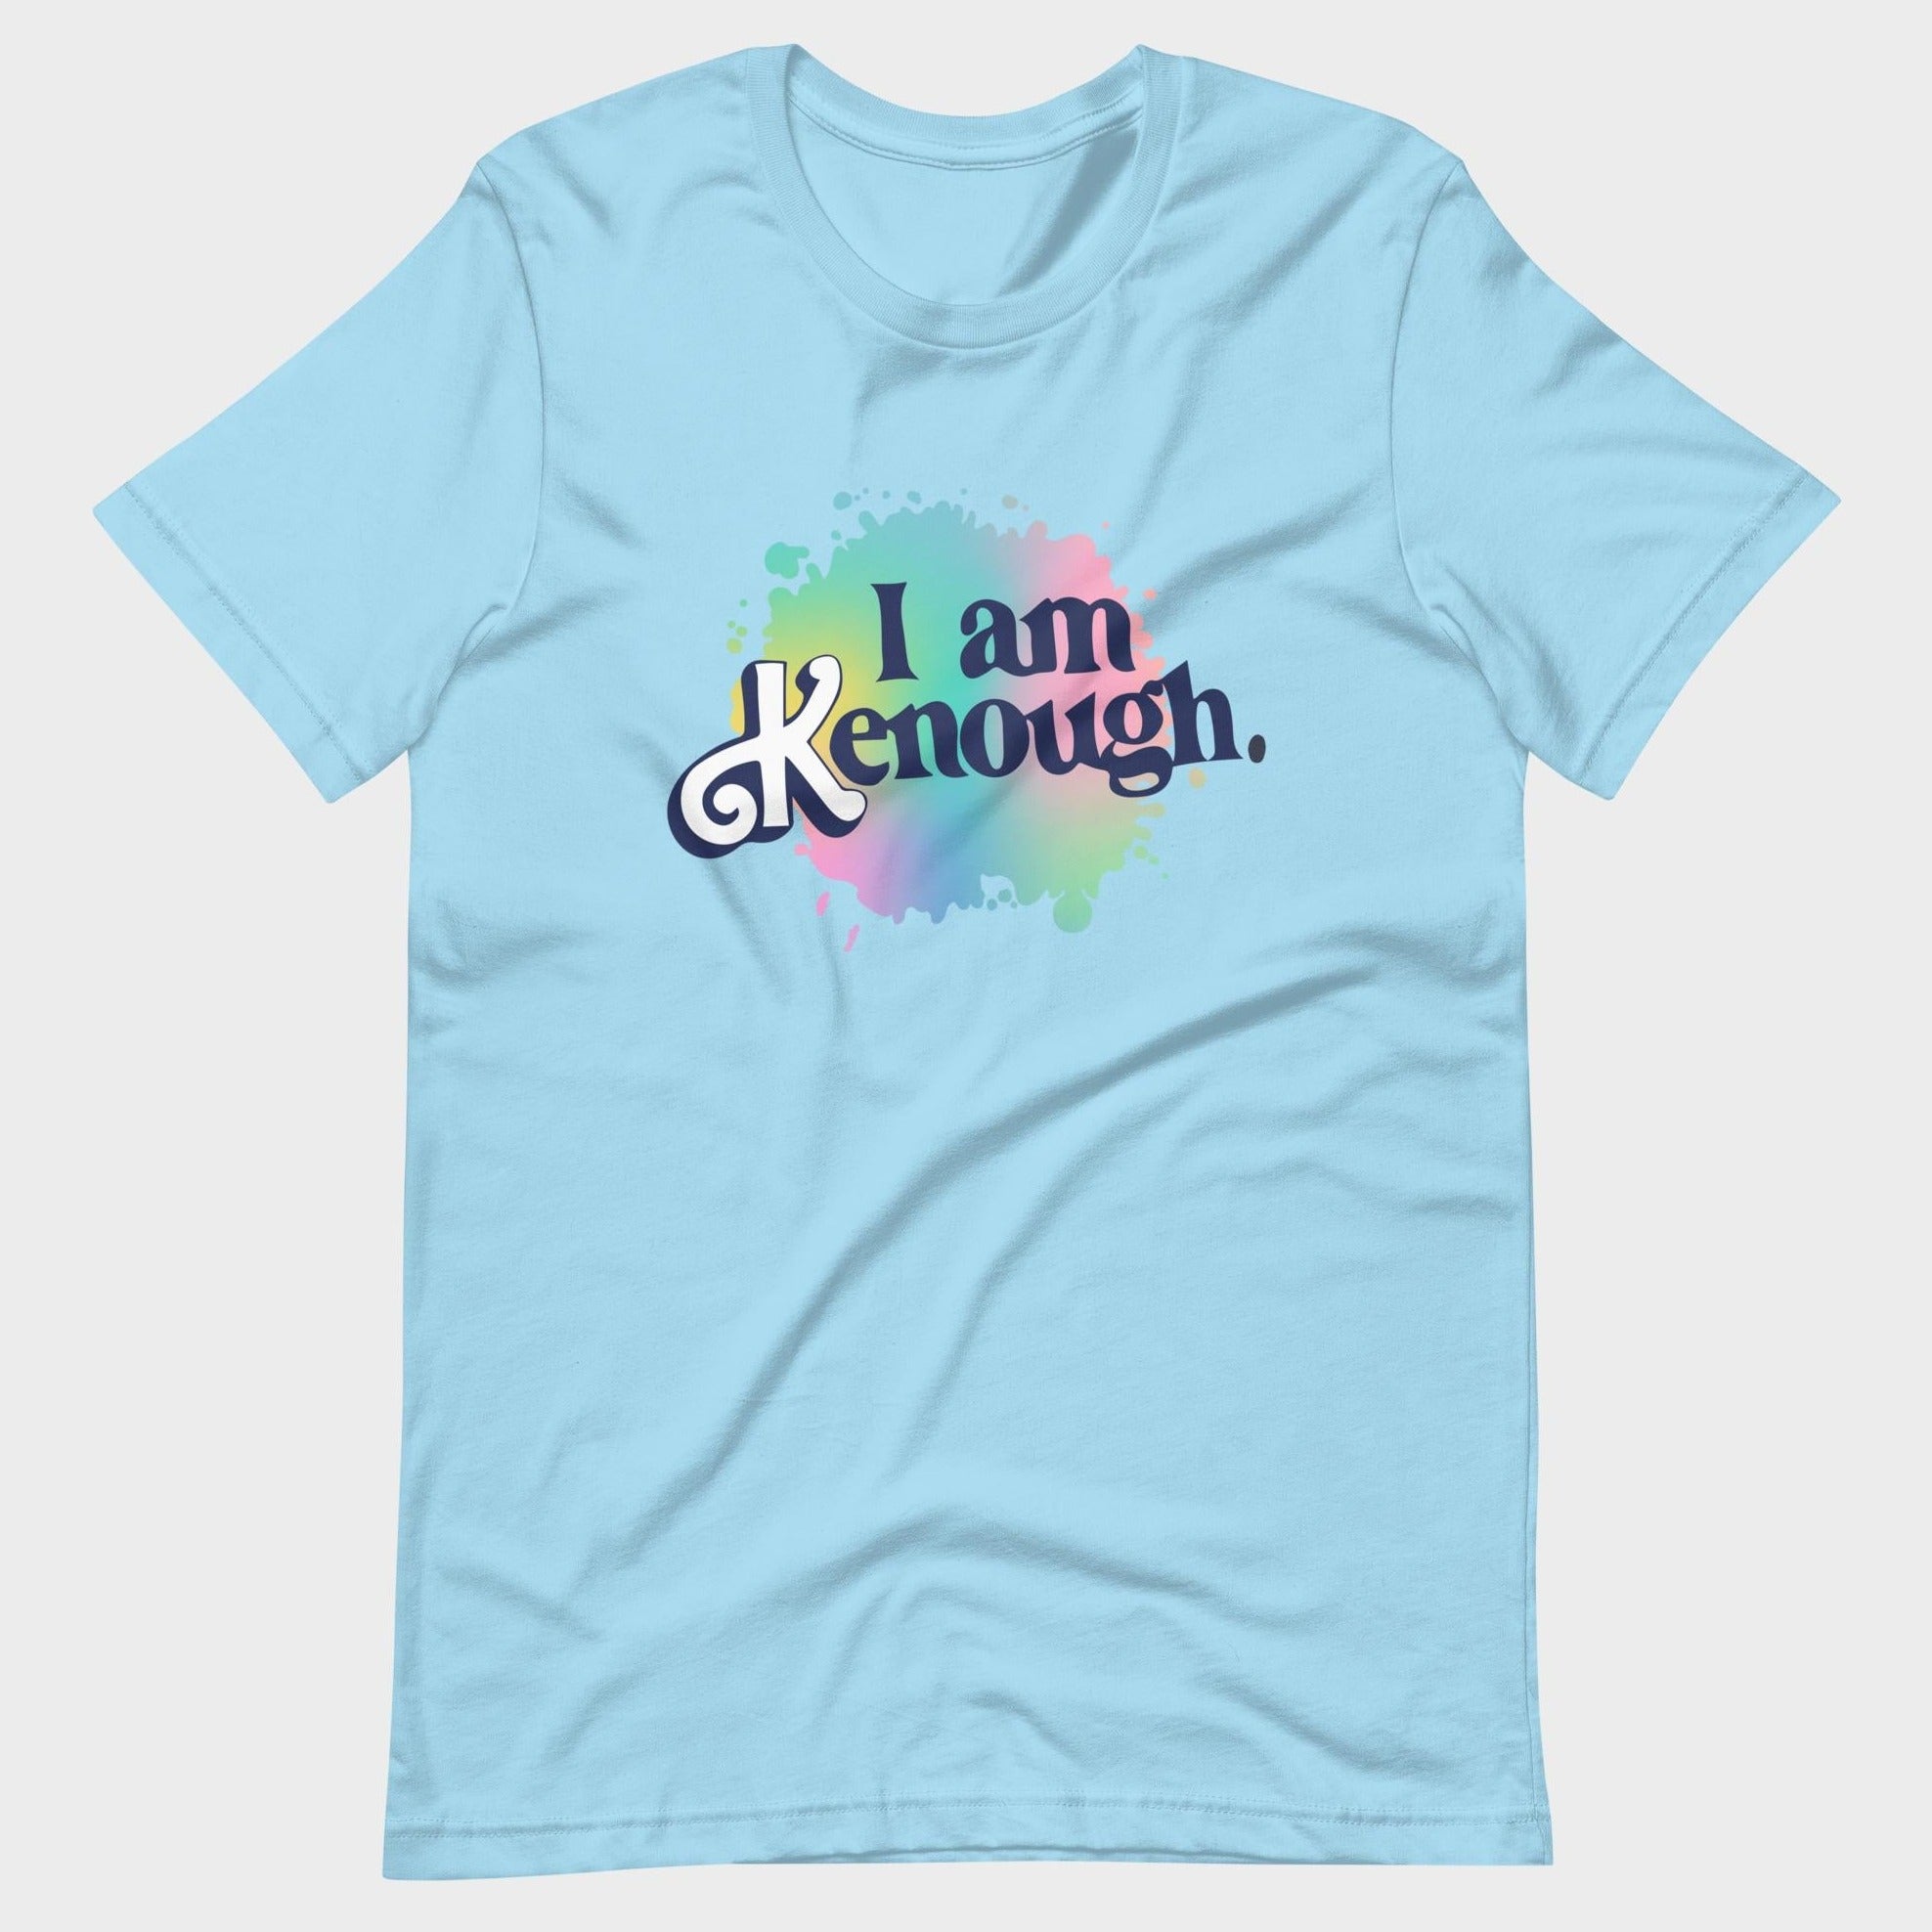 I Am Kenough - T-Shirt